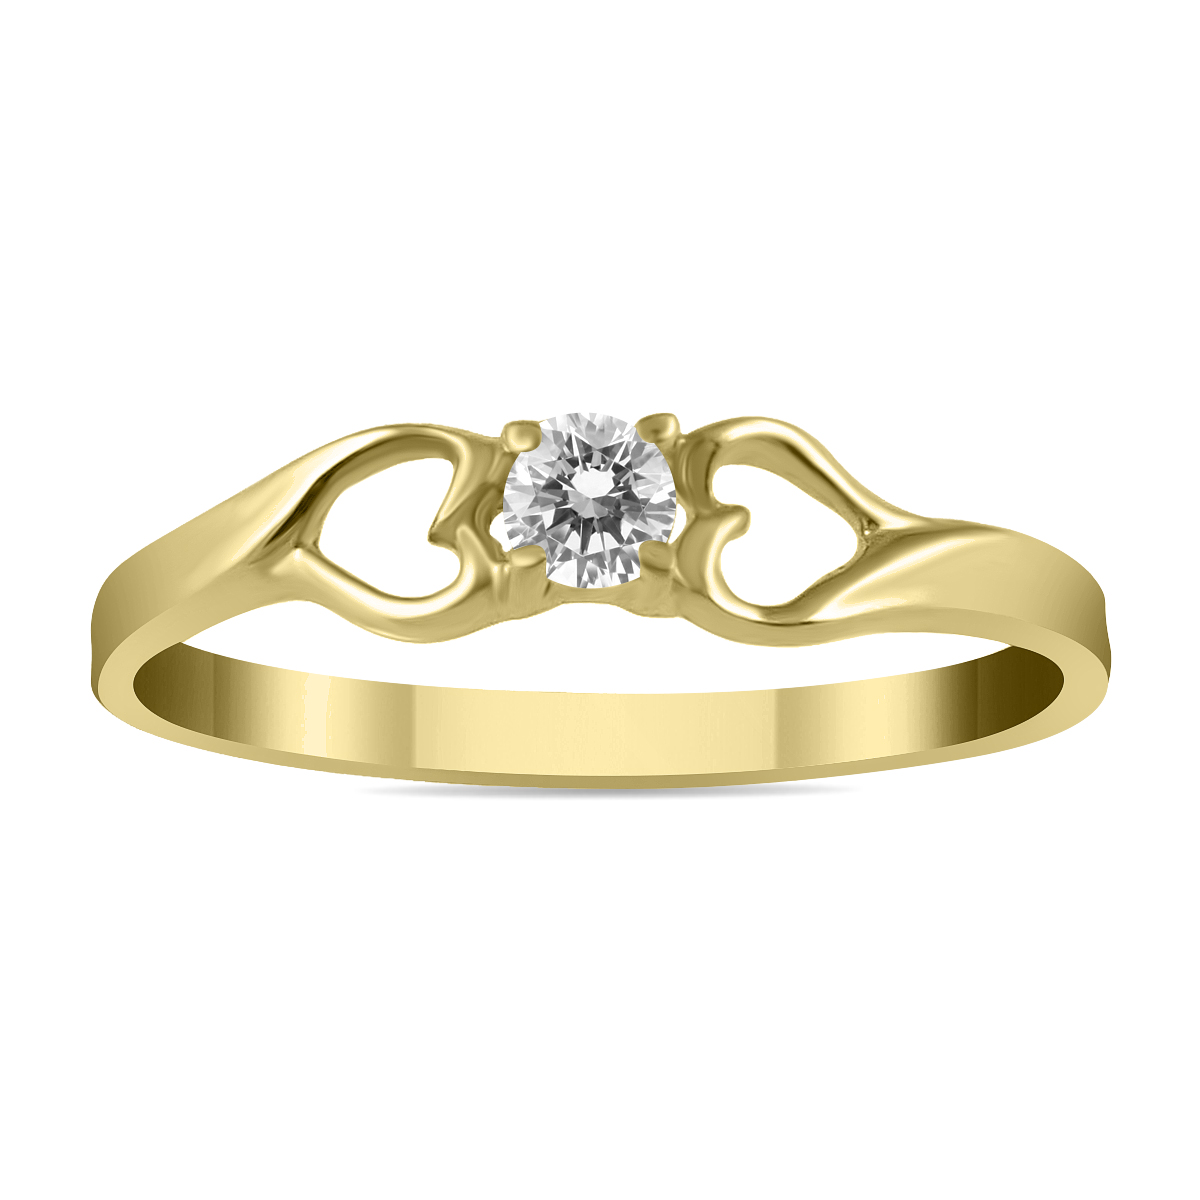 1/10 Carat TW Diamond Heart Ring in 10K Yellow Gold